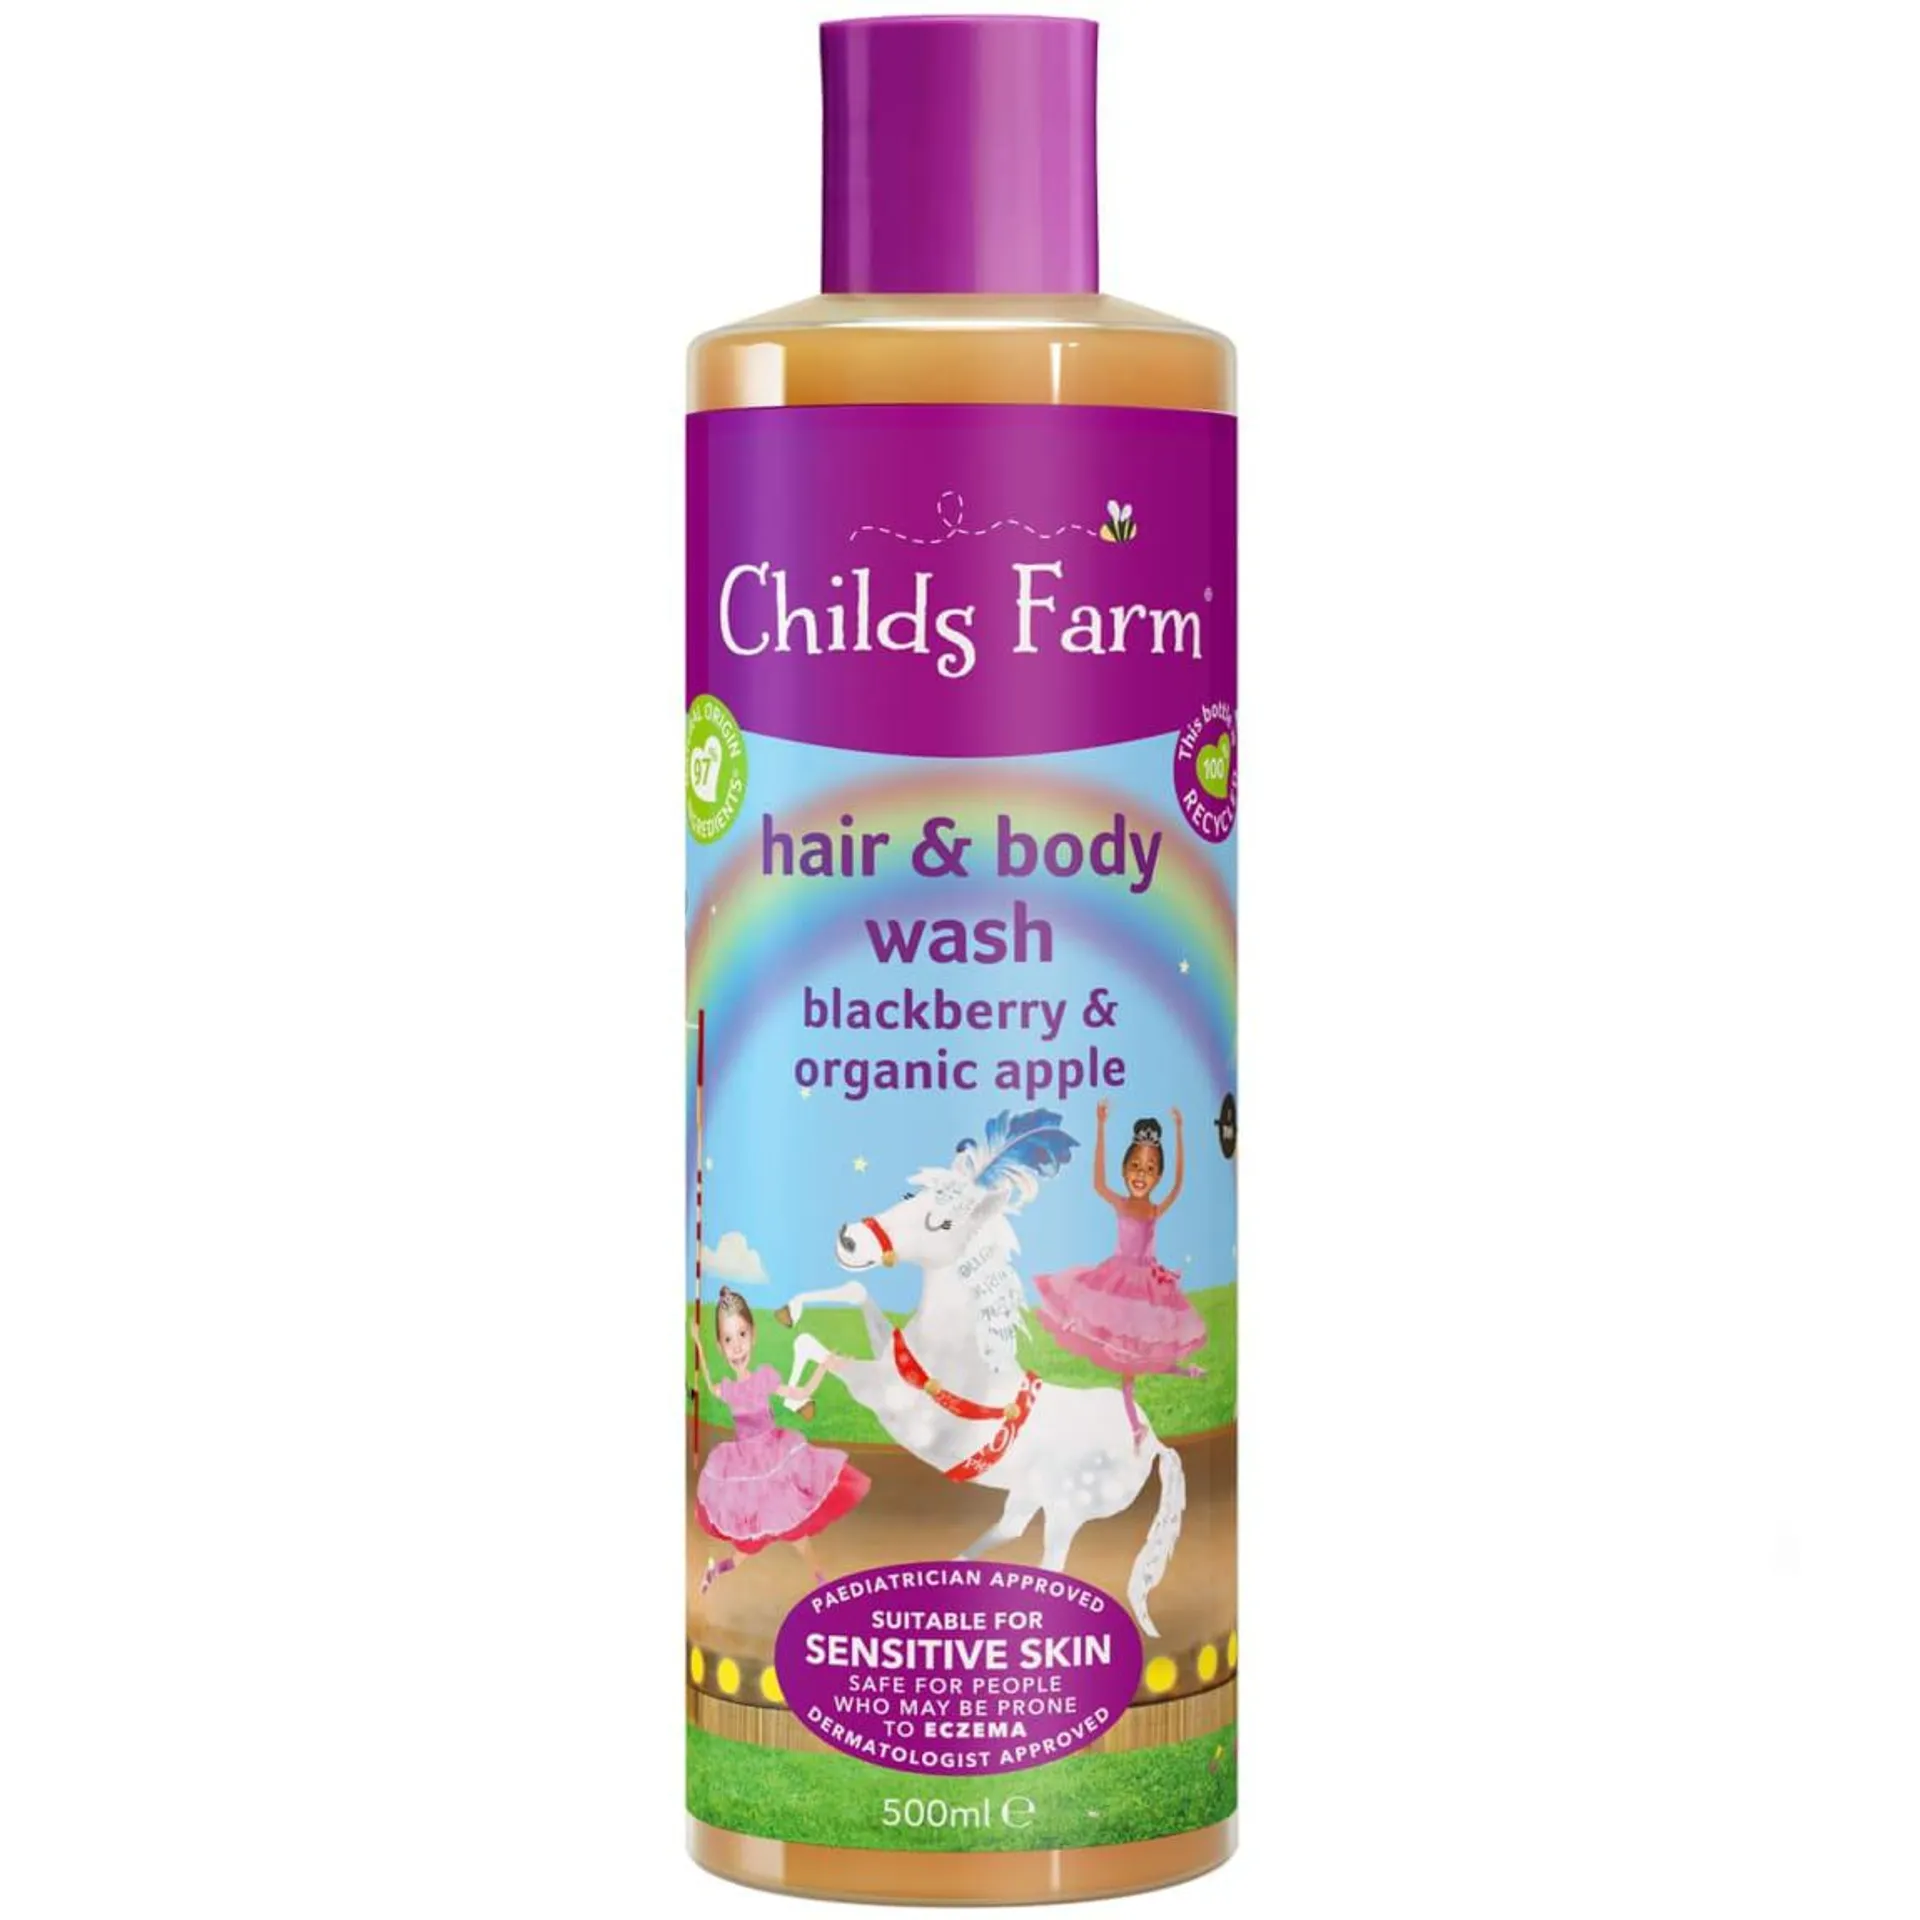 Childs Farm Hair & Body Wash 500ml - Blackberry & Organic Apple